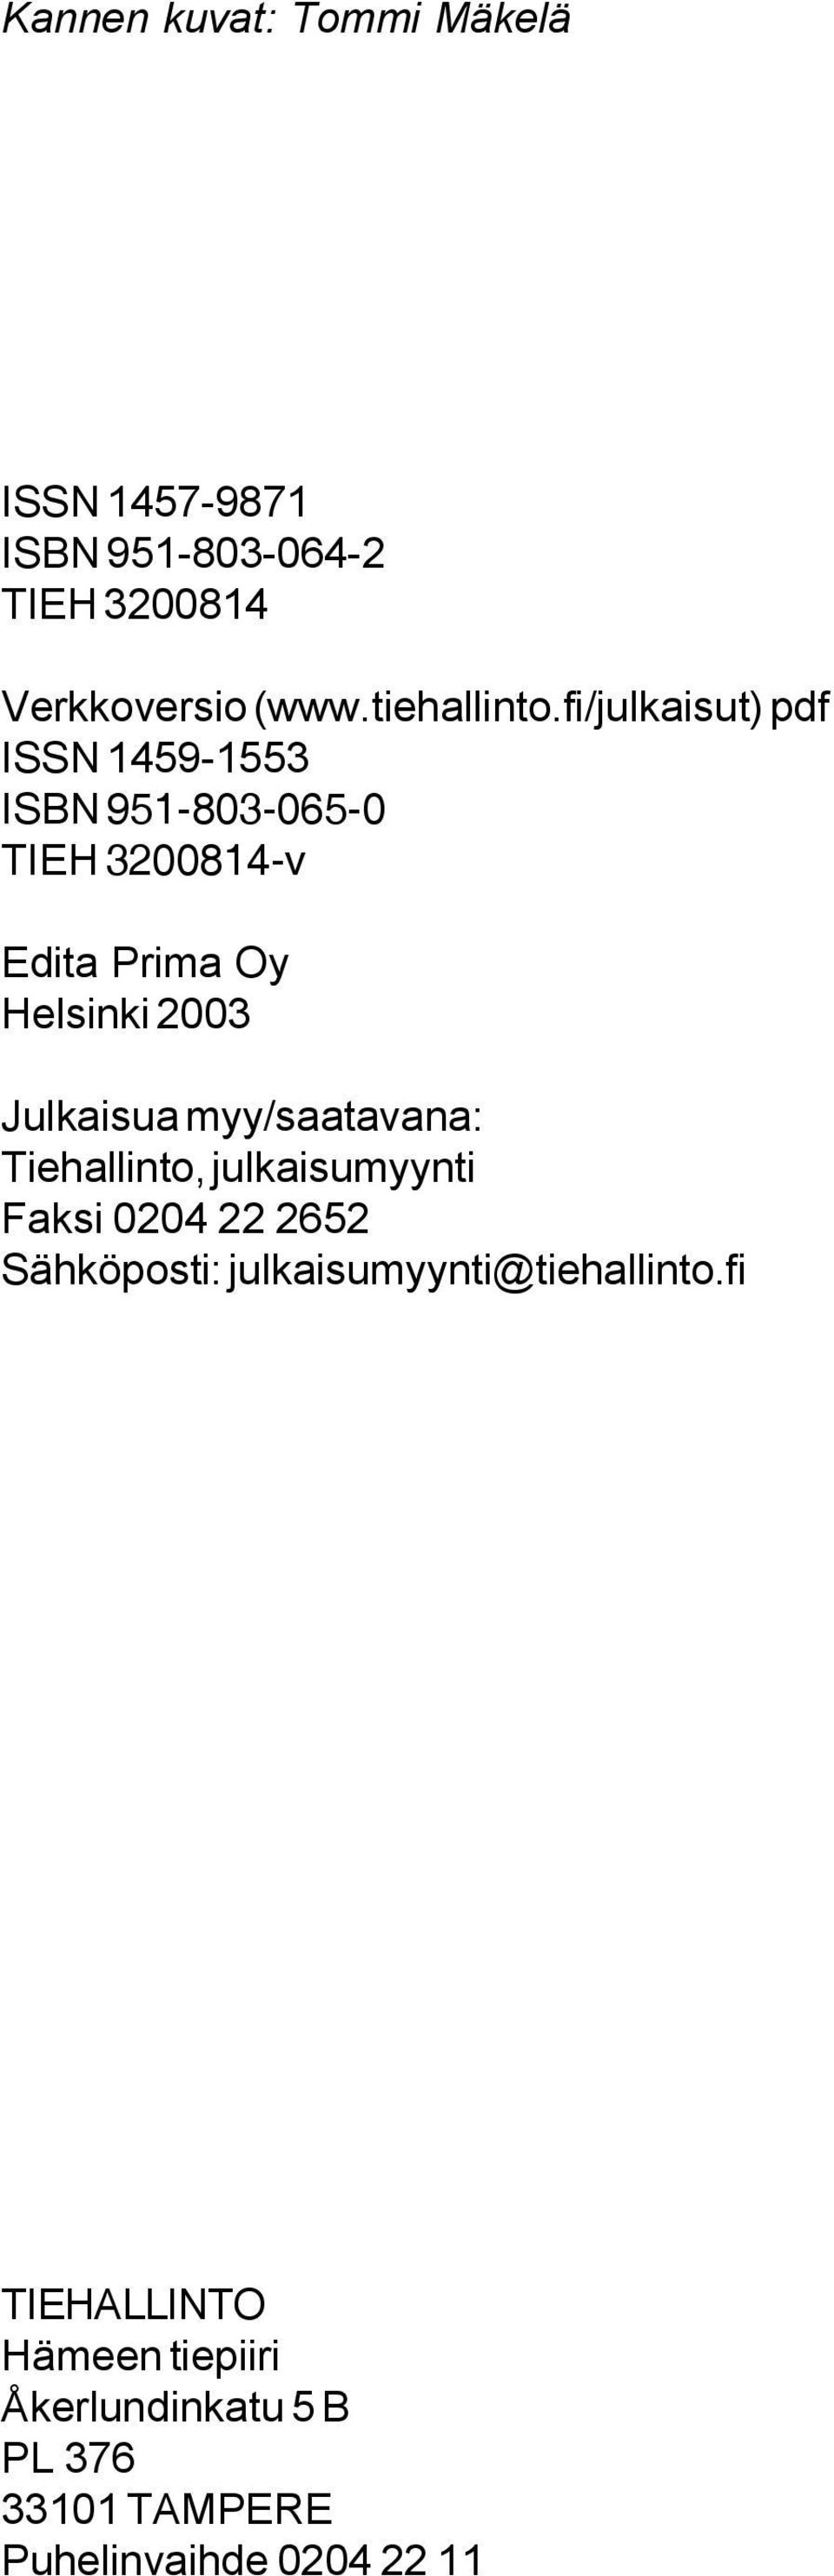 fi/julkaisut) pdf ISSN 1459-1553 ISBN 951-803-065-0 TIEH 3200814-v Edita Prima Oy Helsinki 2003